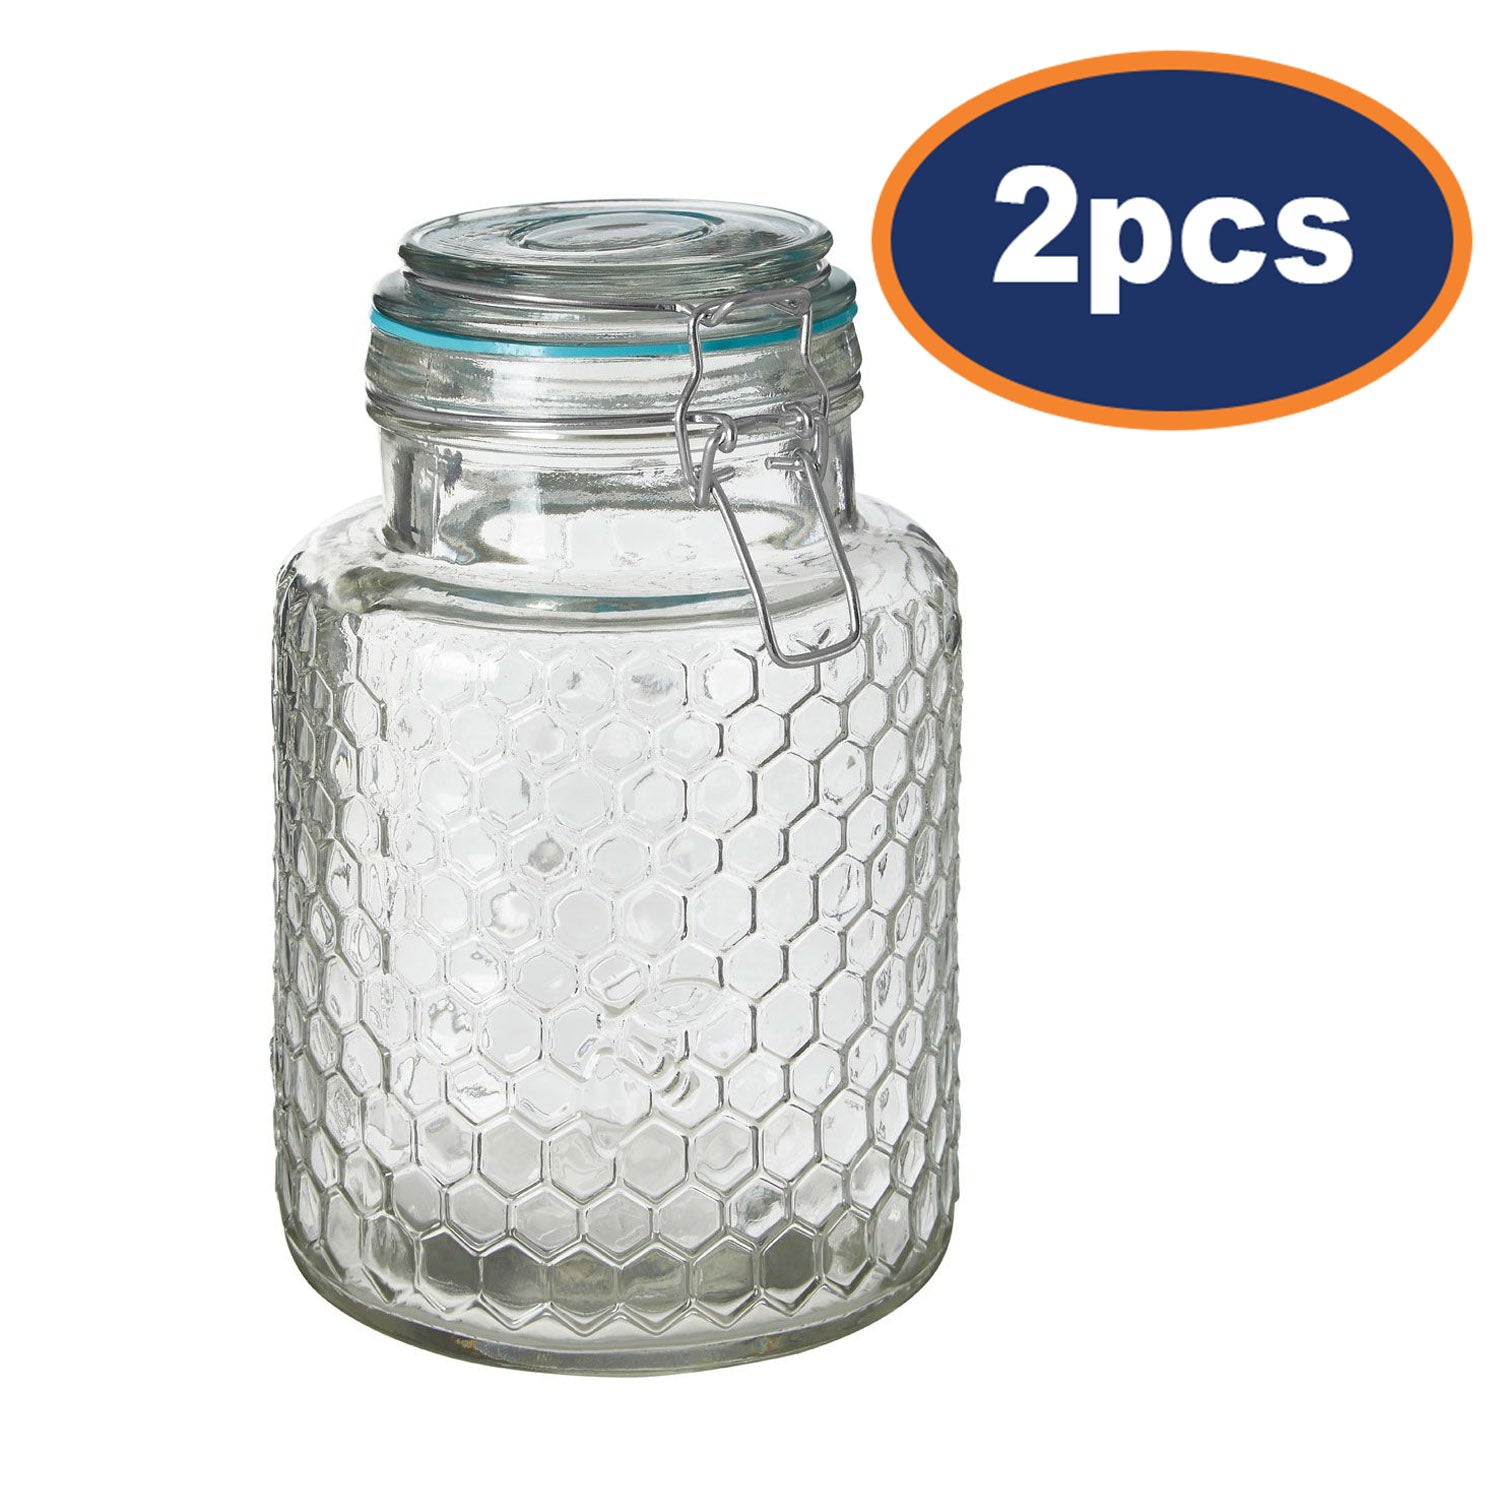 2pcs 1300ml Apiary Glass Preserving Jar